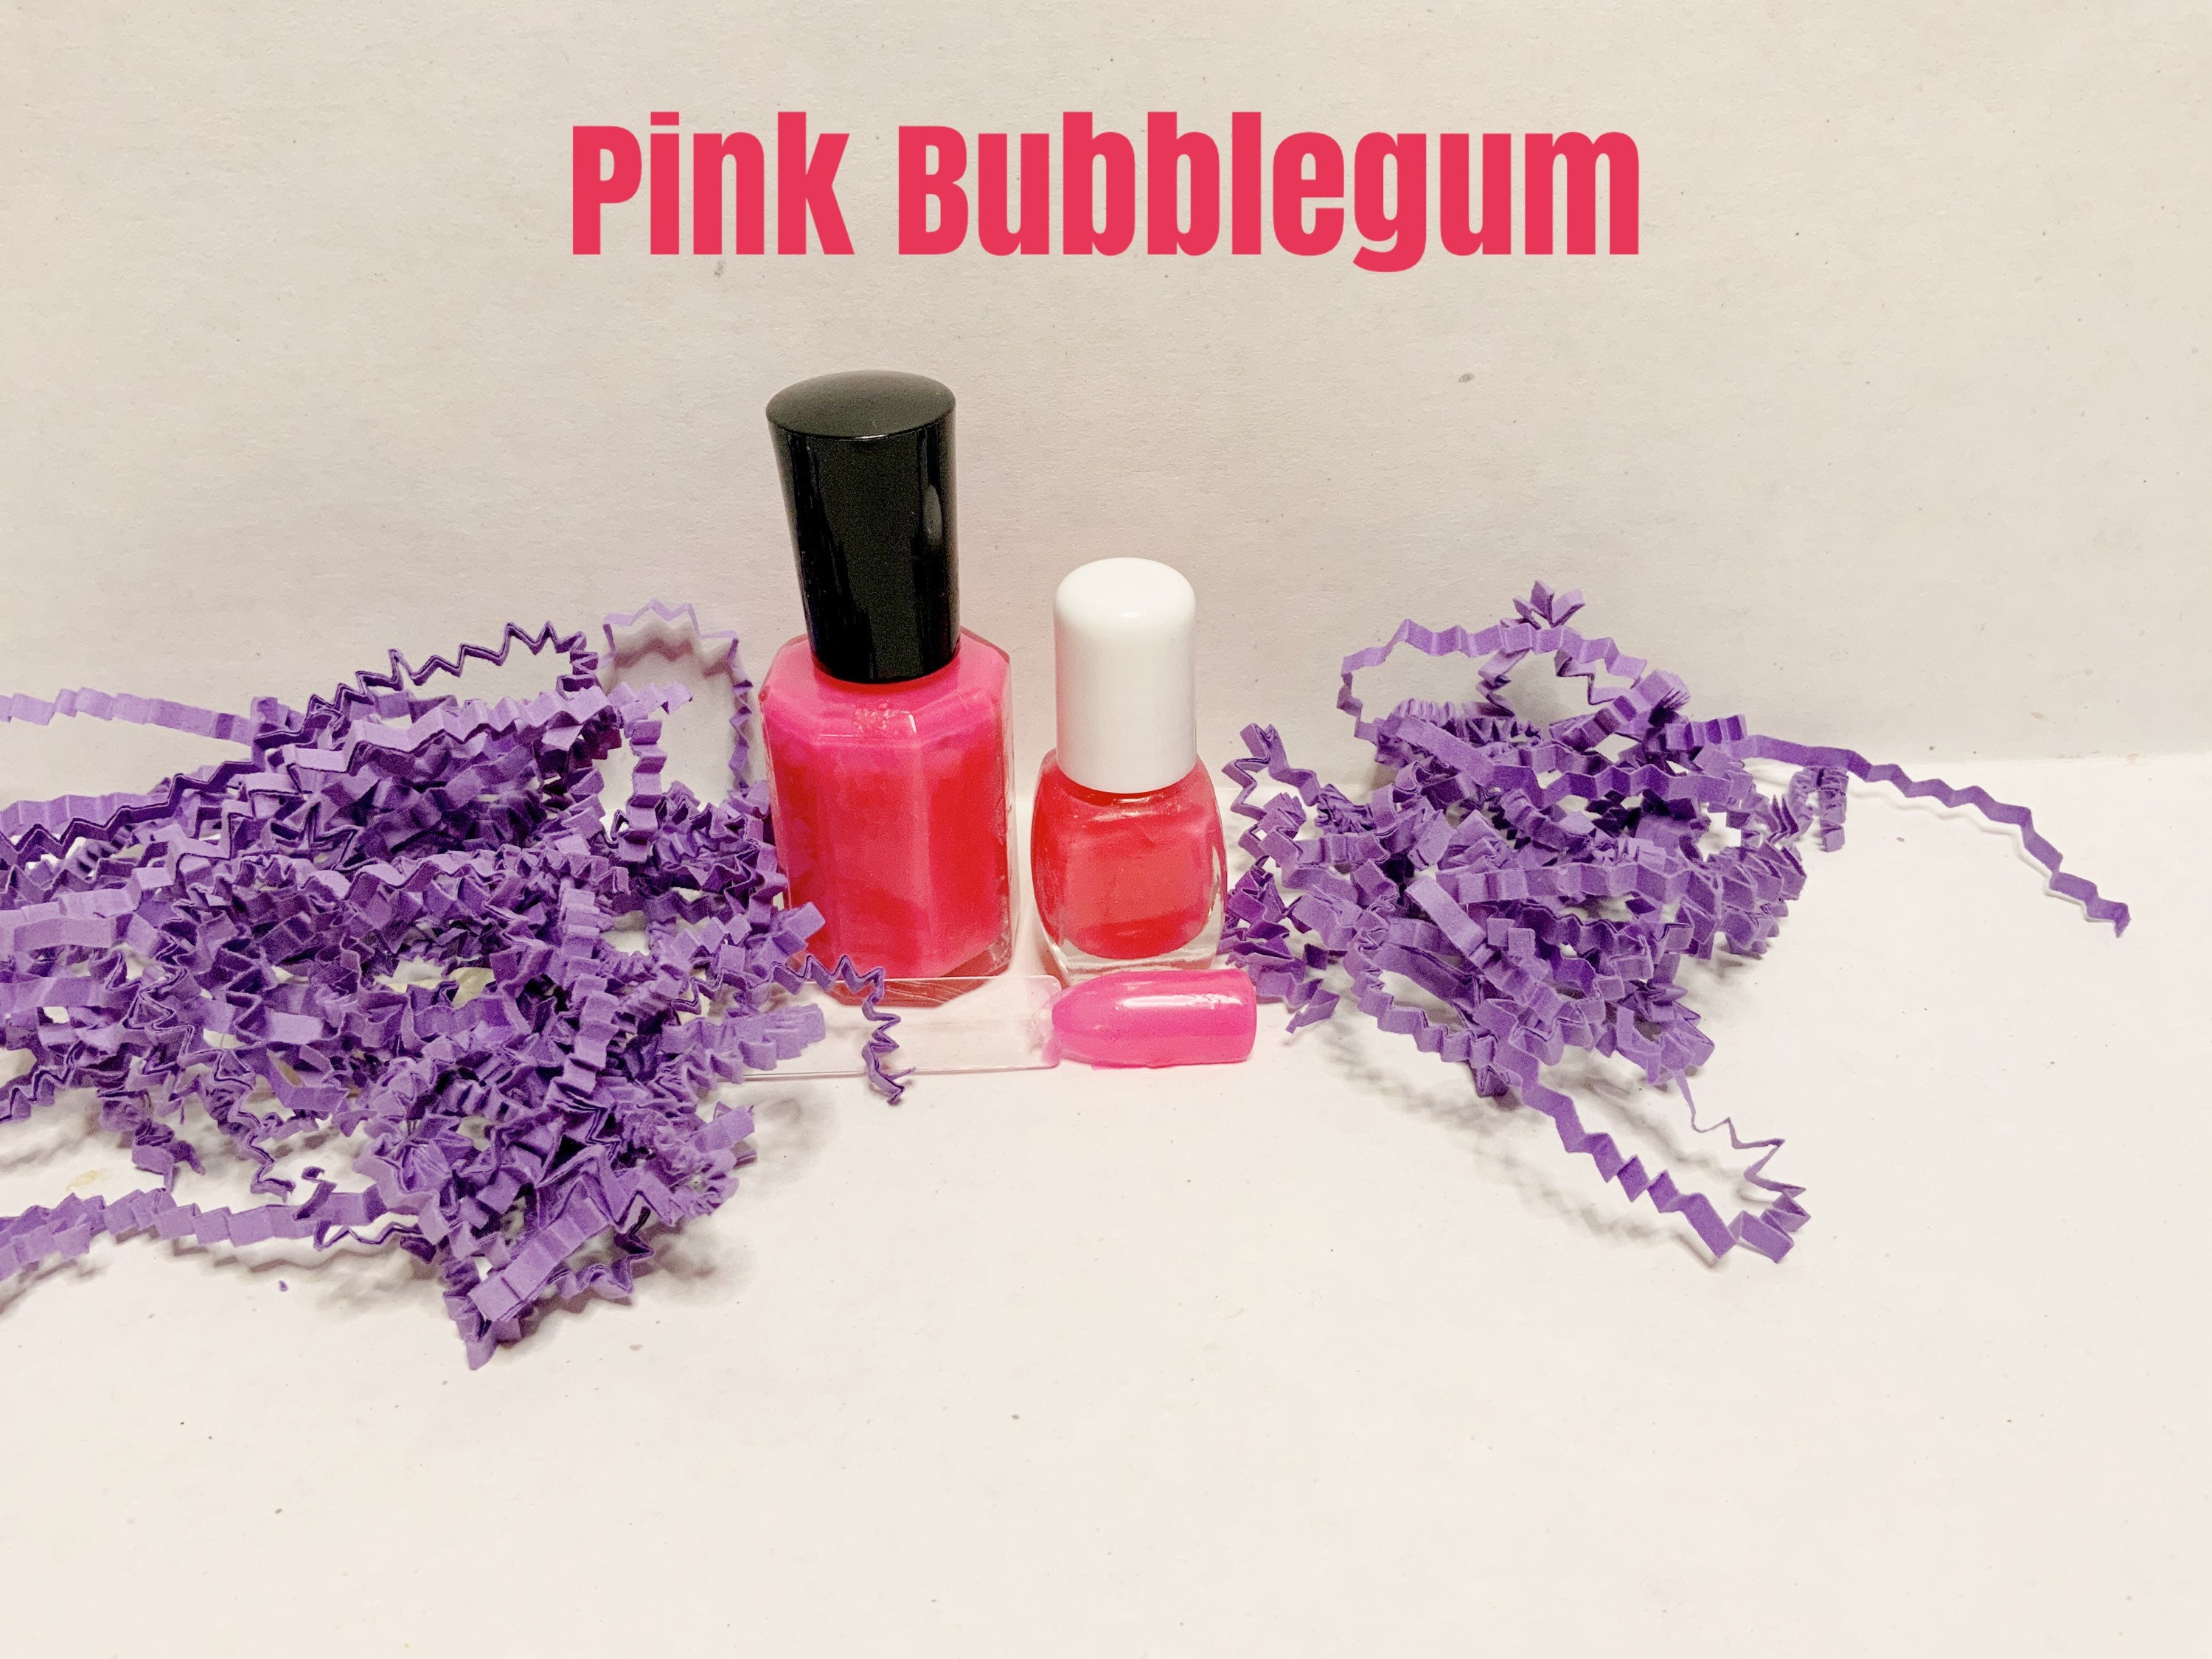 Happy Skin Nail Polish in "Bubblegum Pink" shade - wide 6